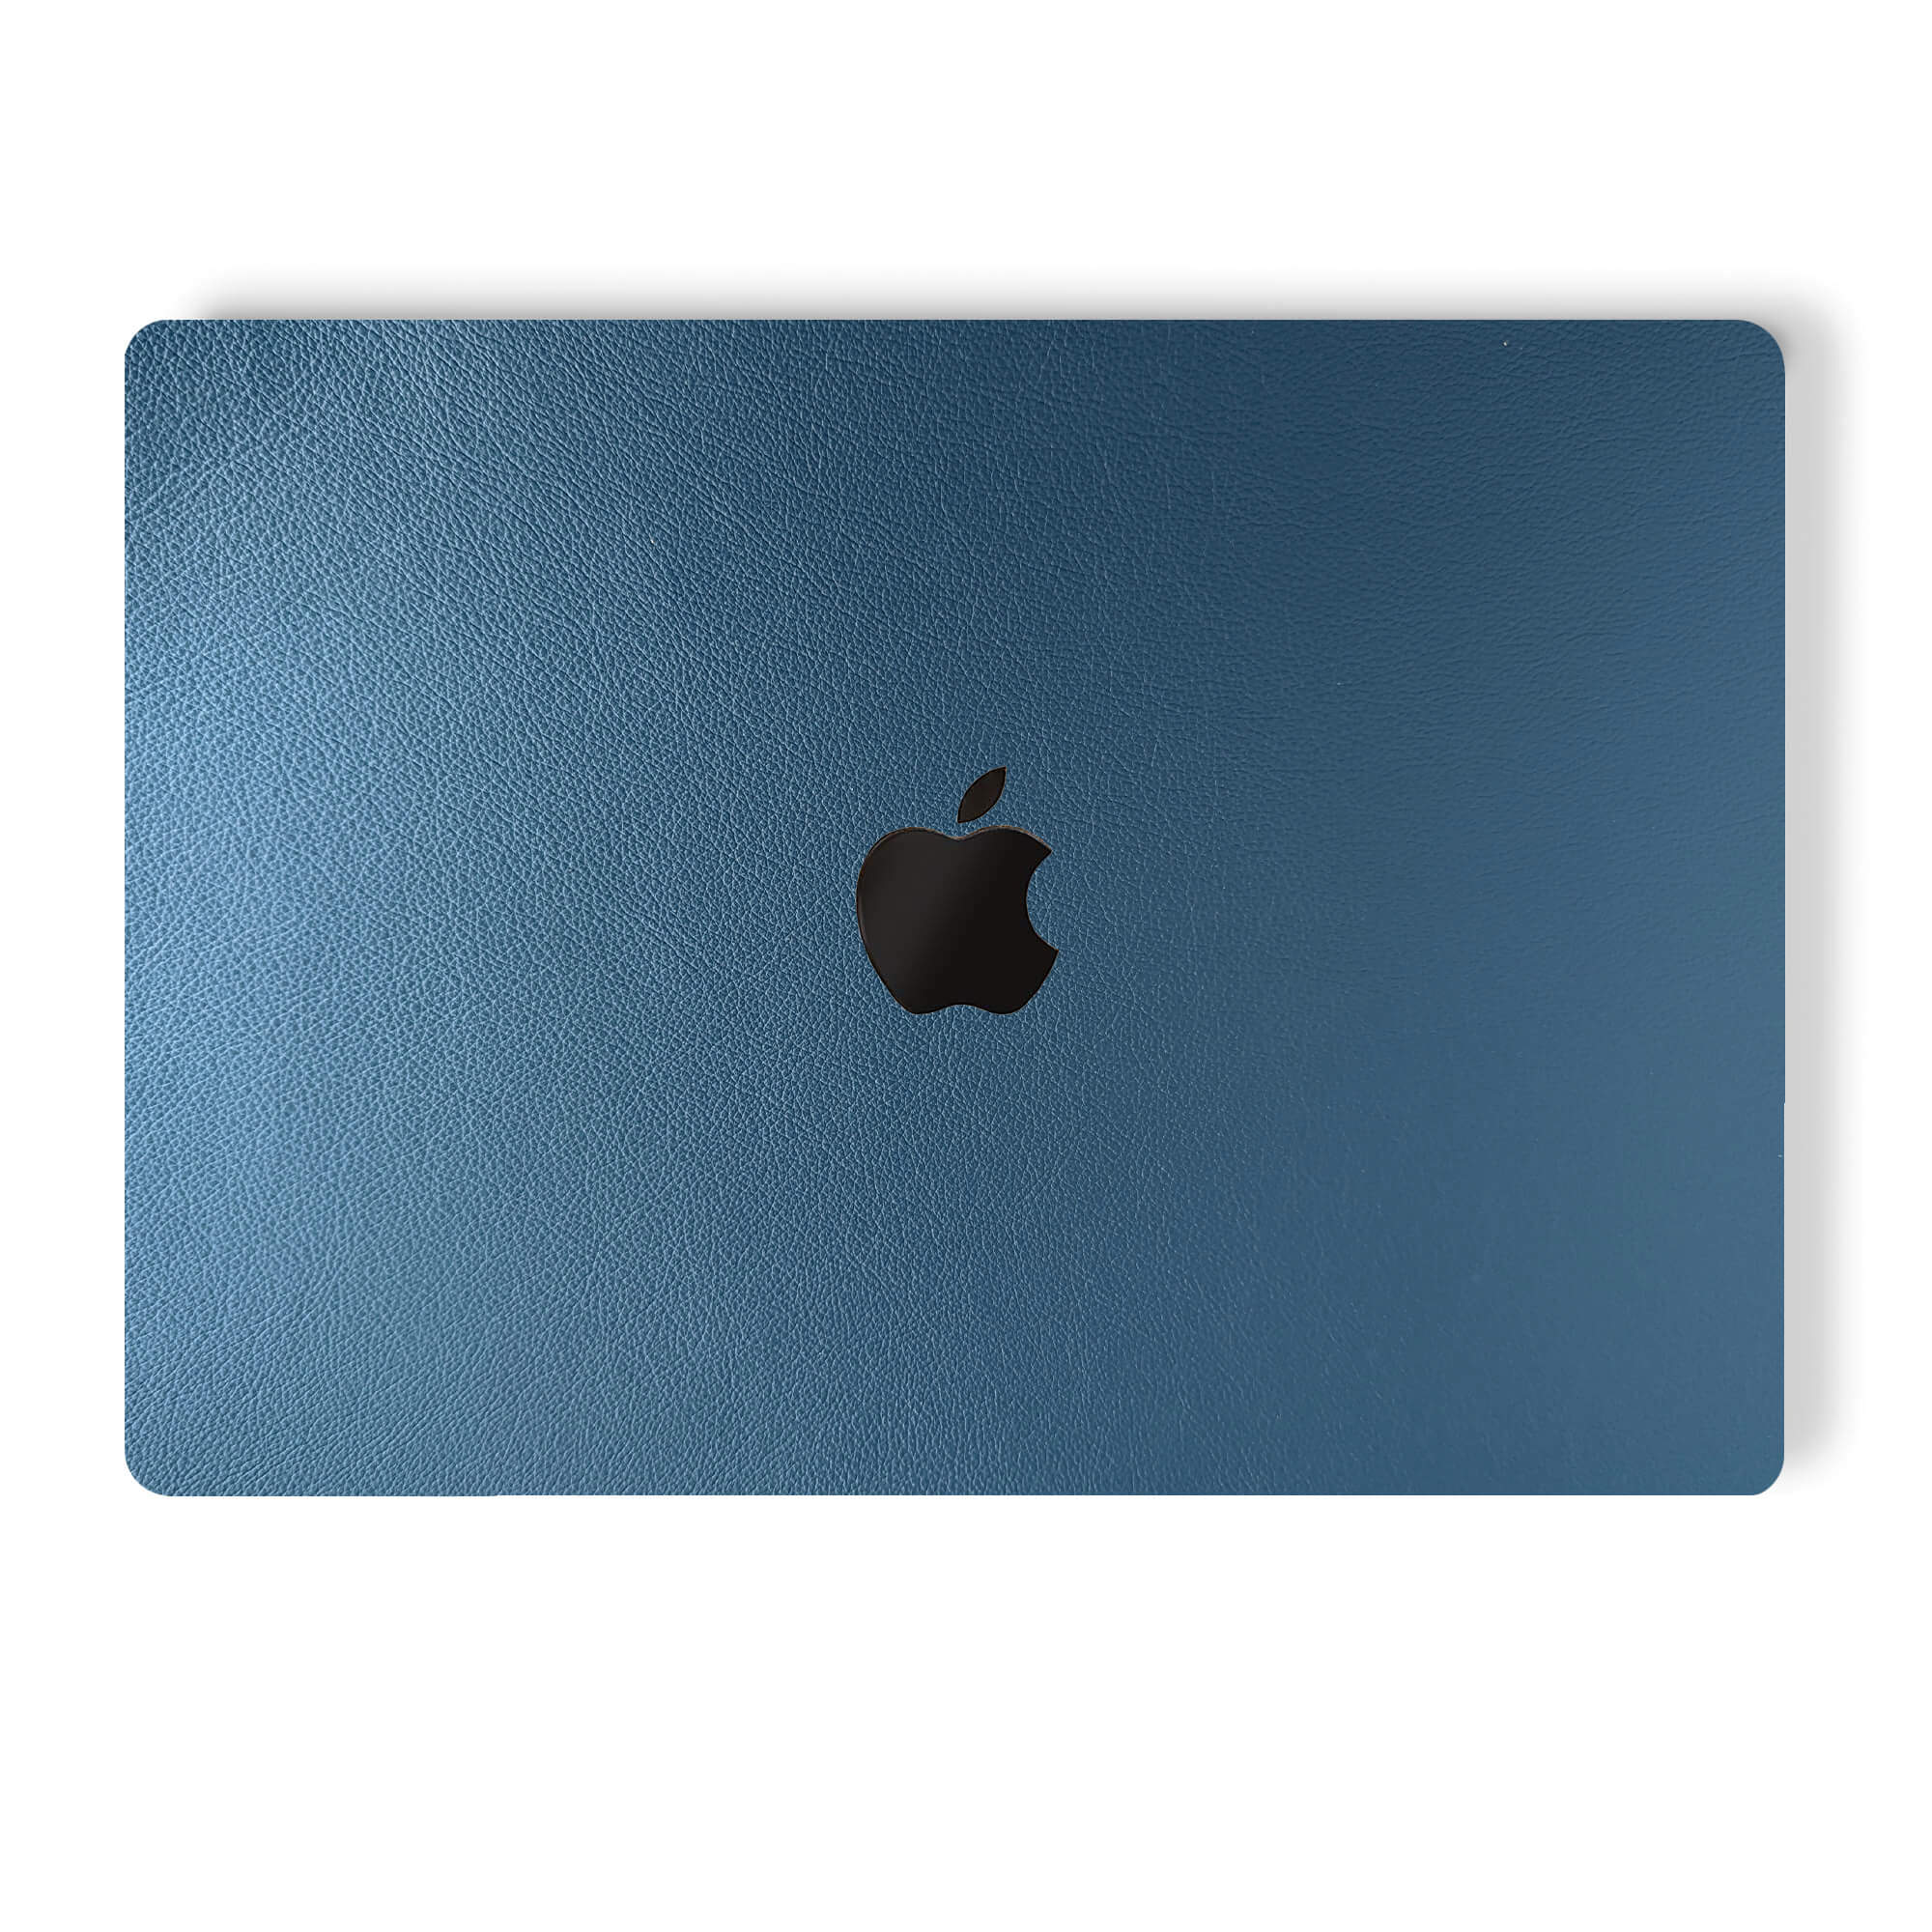 alt:Leather MacBook Skin| var:cobalt-blue |, |, LCB-MB-Pro16, LCB-MB-Pro15, LCB-MB-Pro1320, LCB-MB-Air20, LCB-MB-Ret15, LCB-MB-Ret13, LCB-MB-Air13, LCB-MB-12